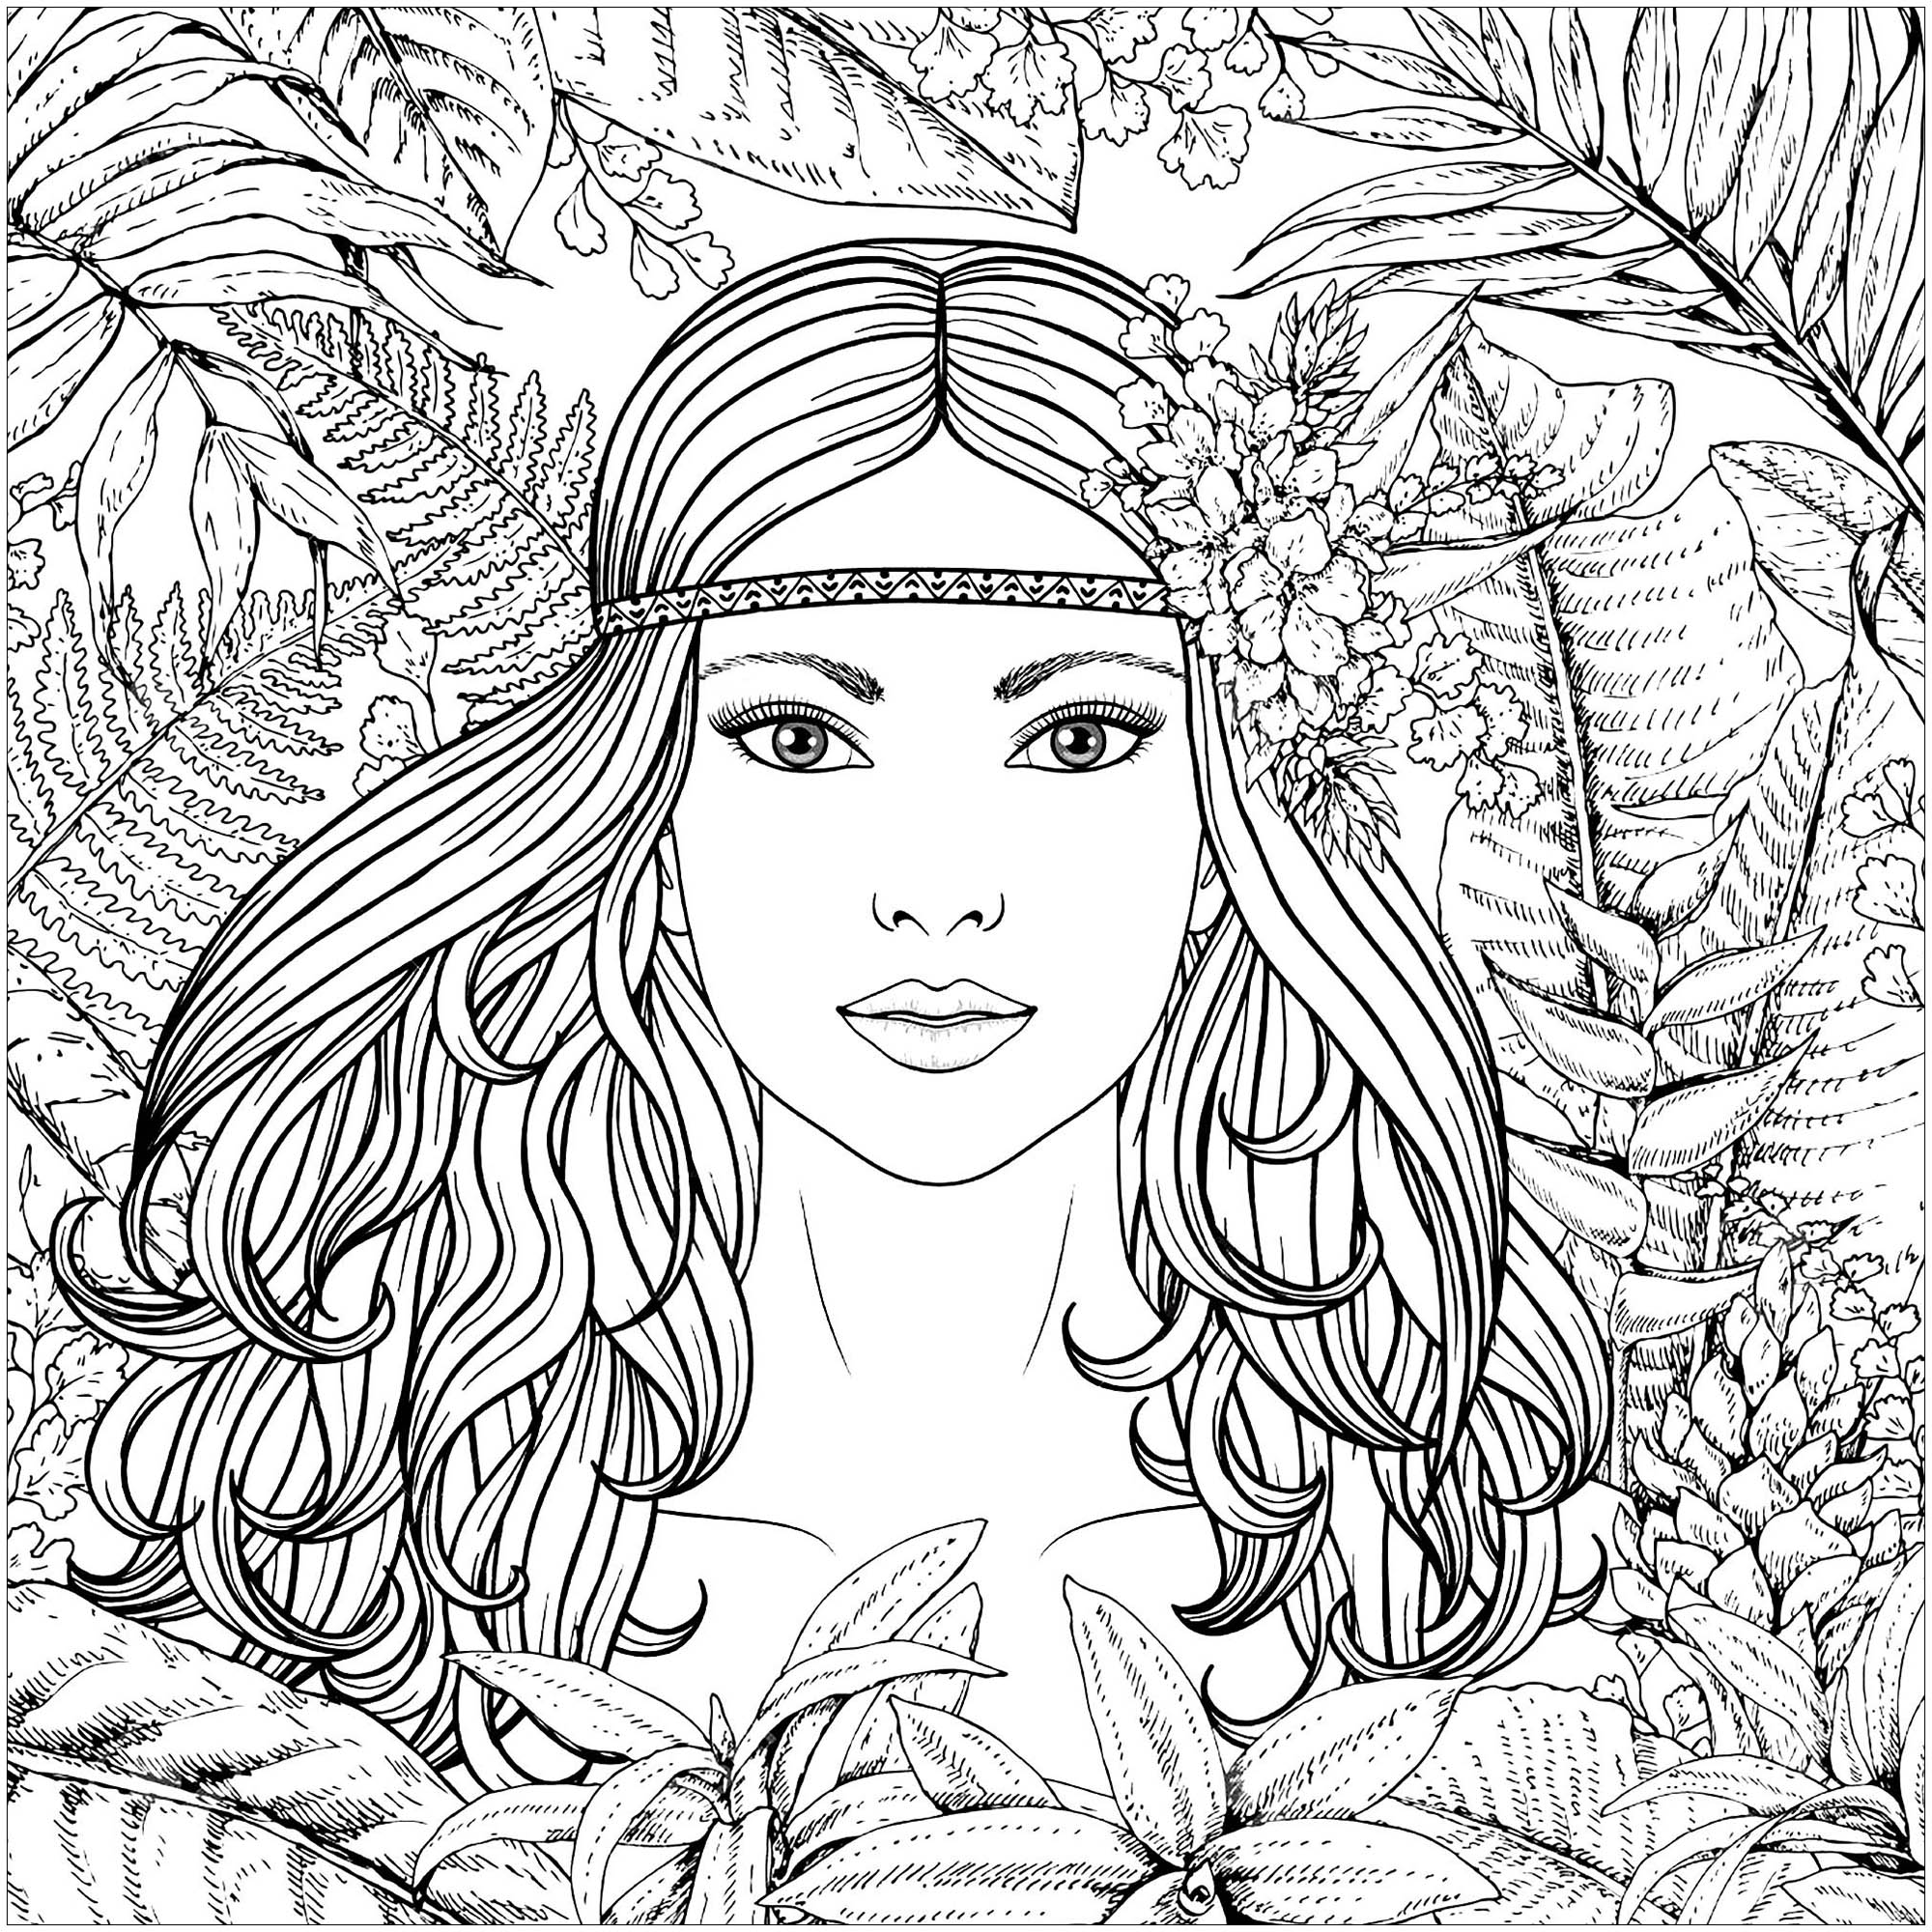 Femme de la forêt, Source : 123rf   Artiste : Valentyna Smordova